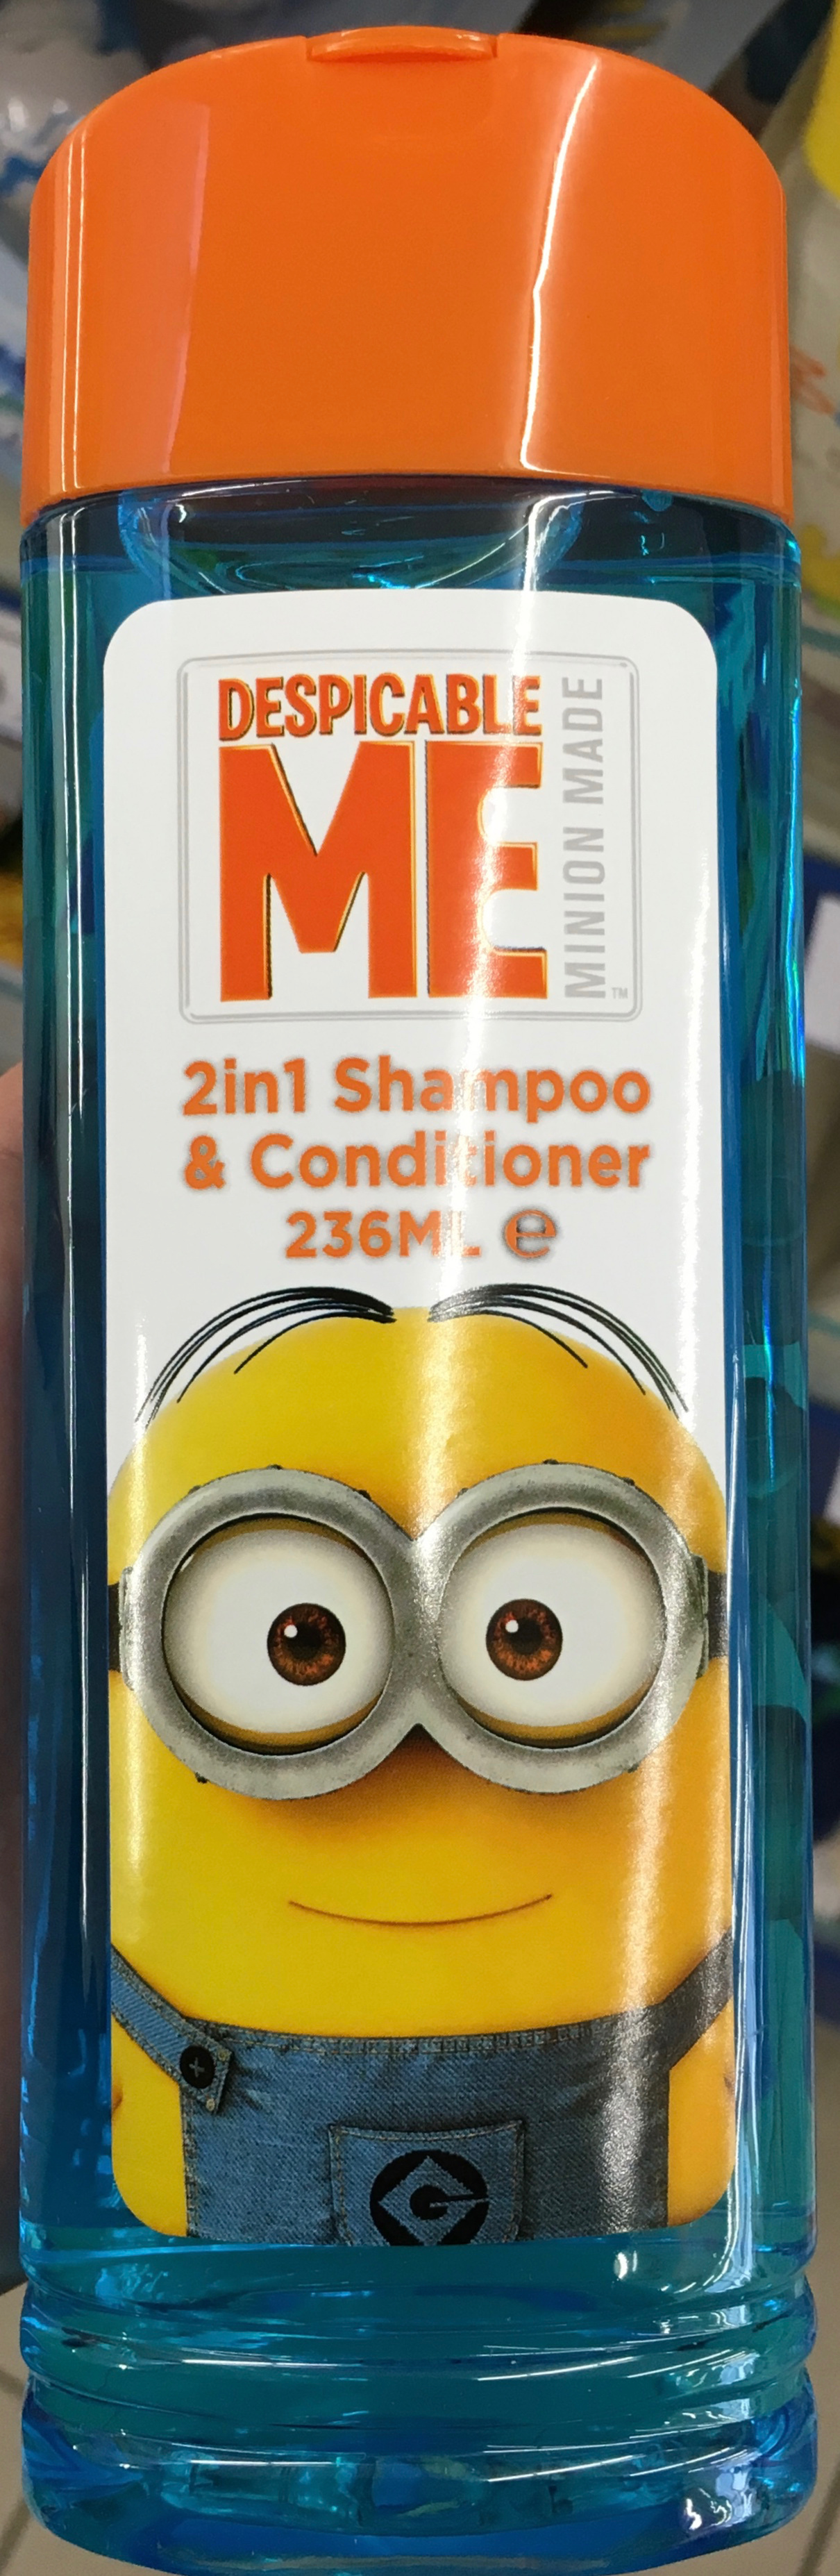 2in1 Shampoo & Conditioner Despicable Me - Produit - fr